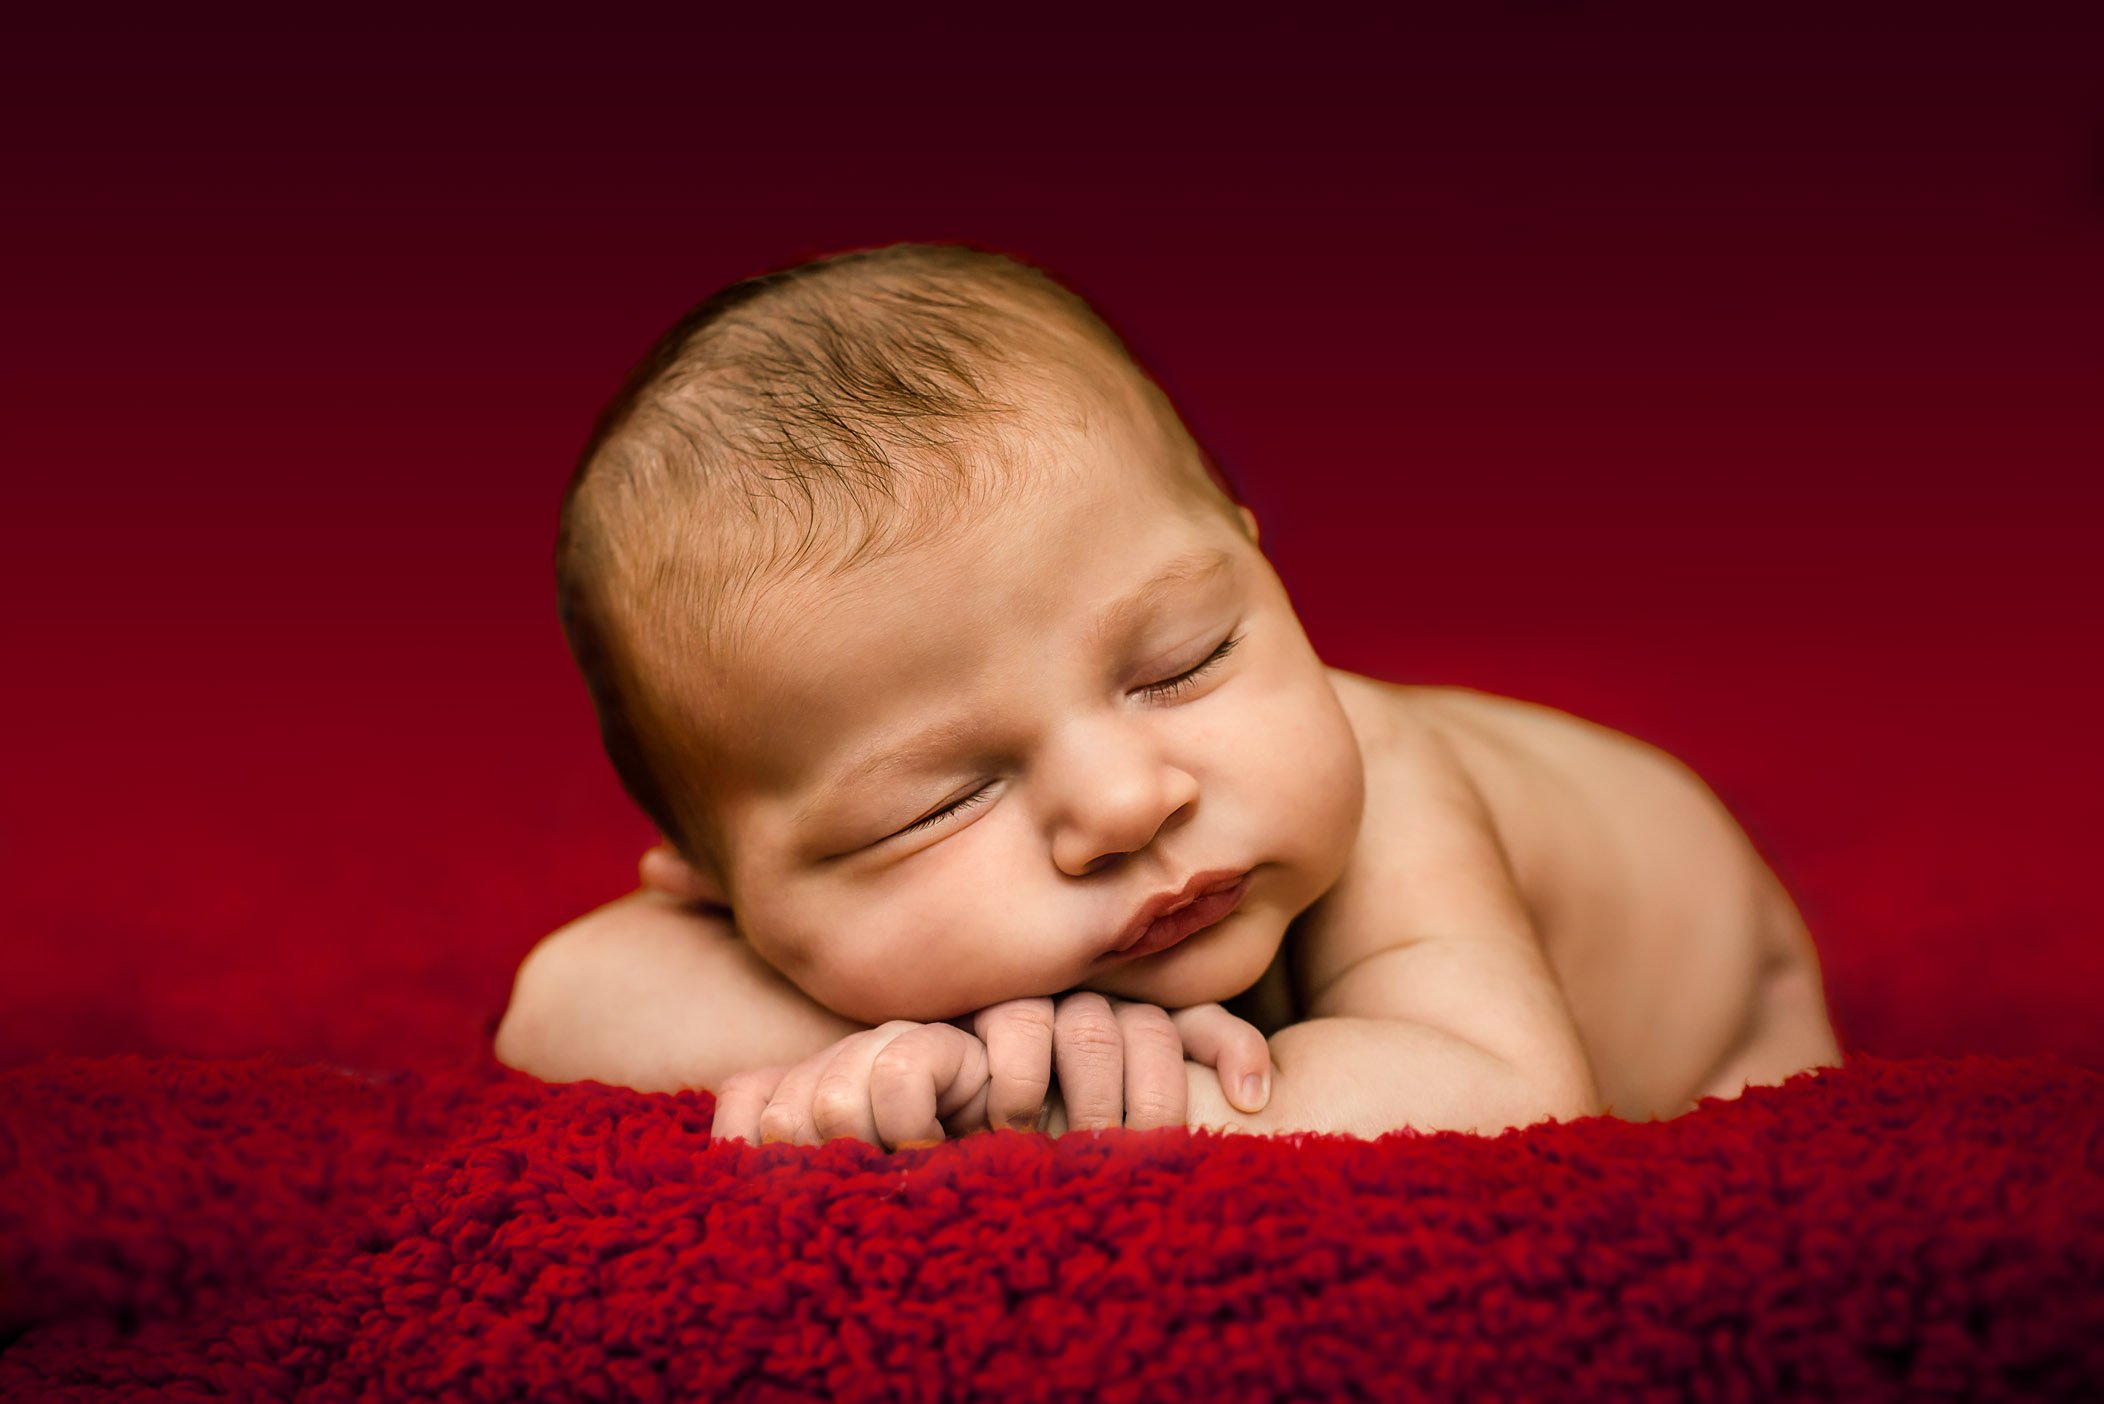 newborn Christmas photos sleeping on deep red blanket